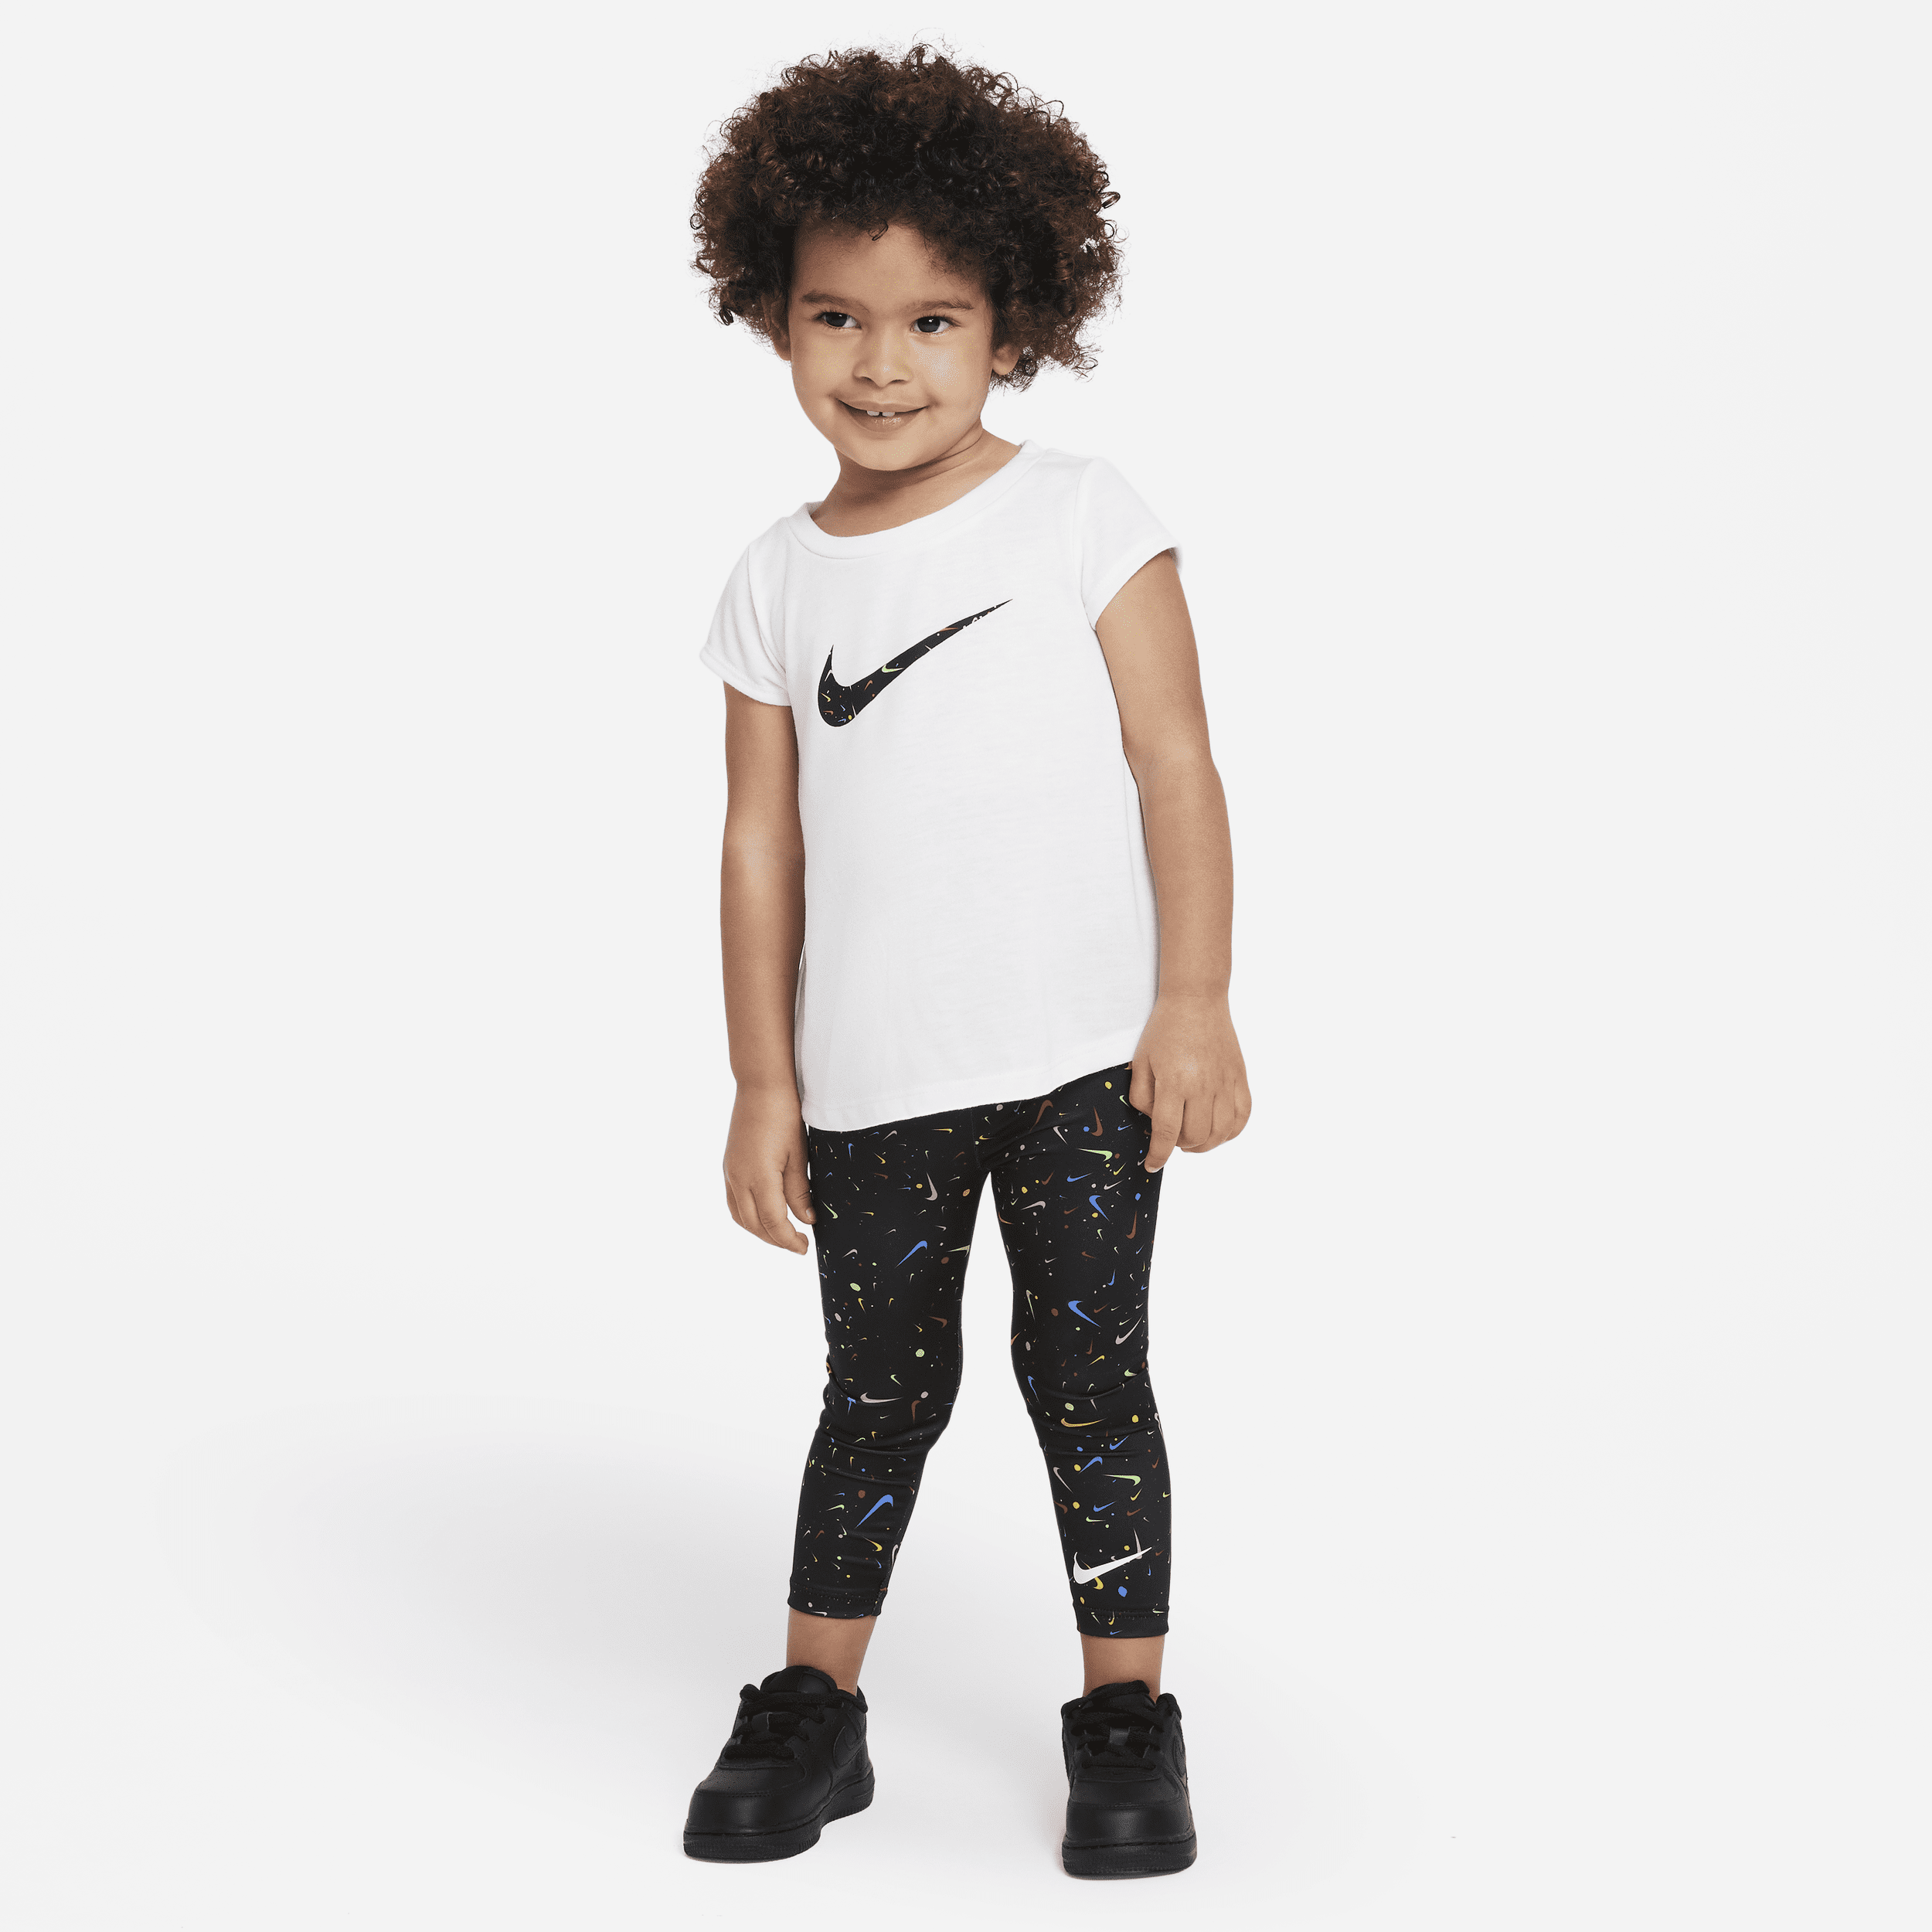 Completo t-shirt e leggings Nike - Neonati (12-24 mesi) - Nero